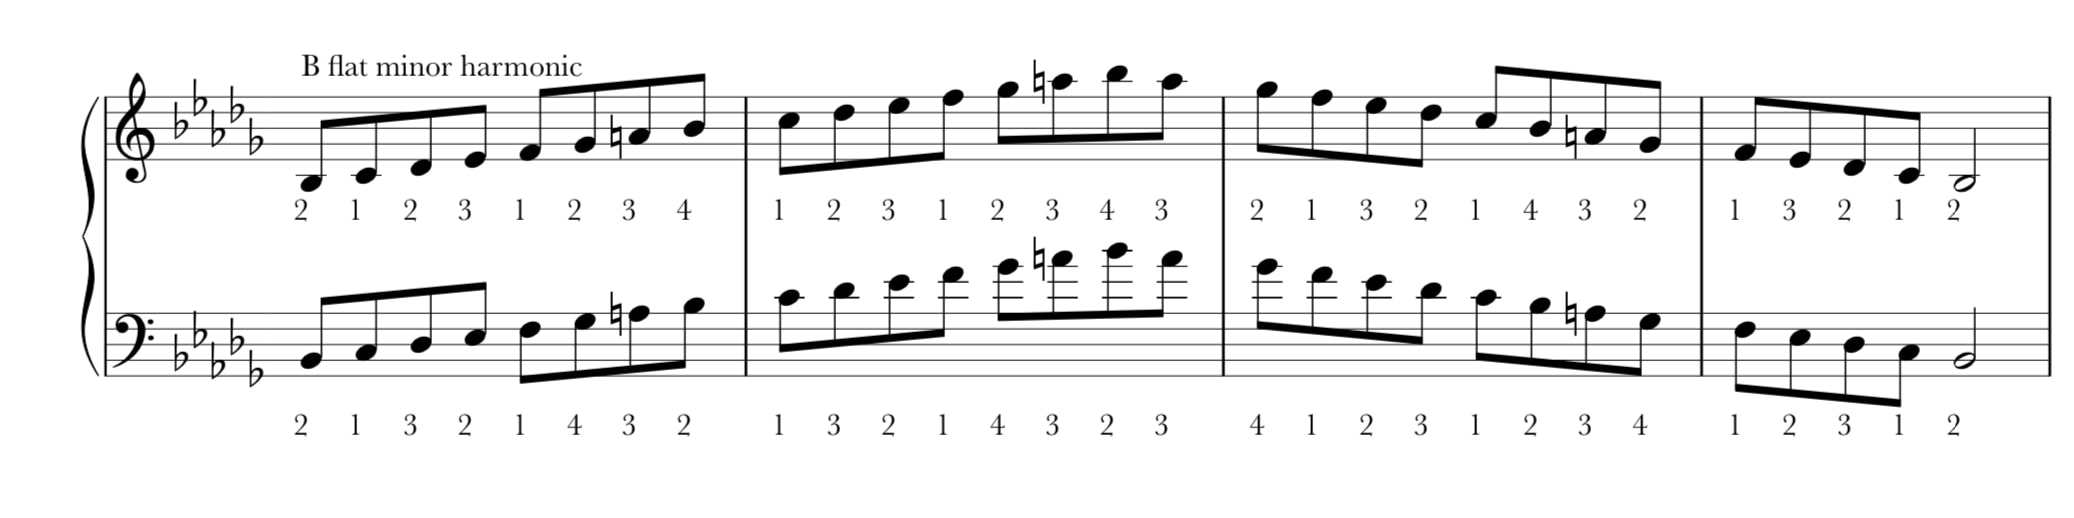 B flat harmonic minor scale